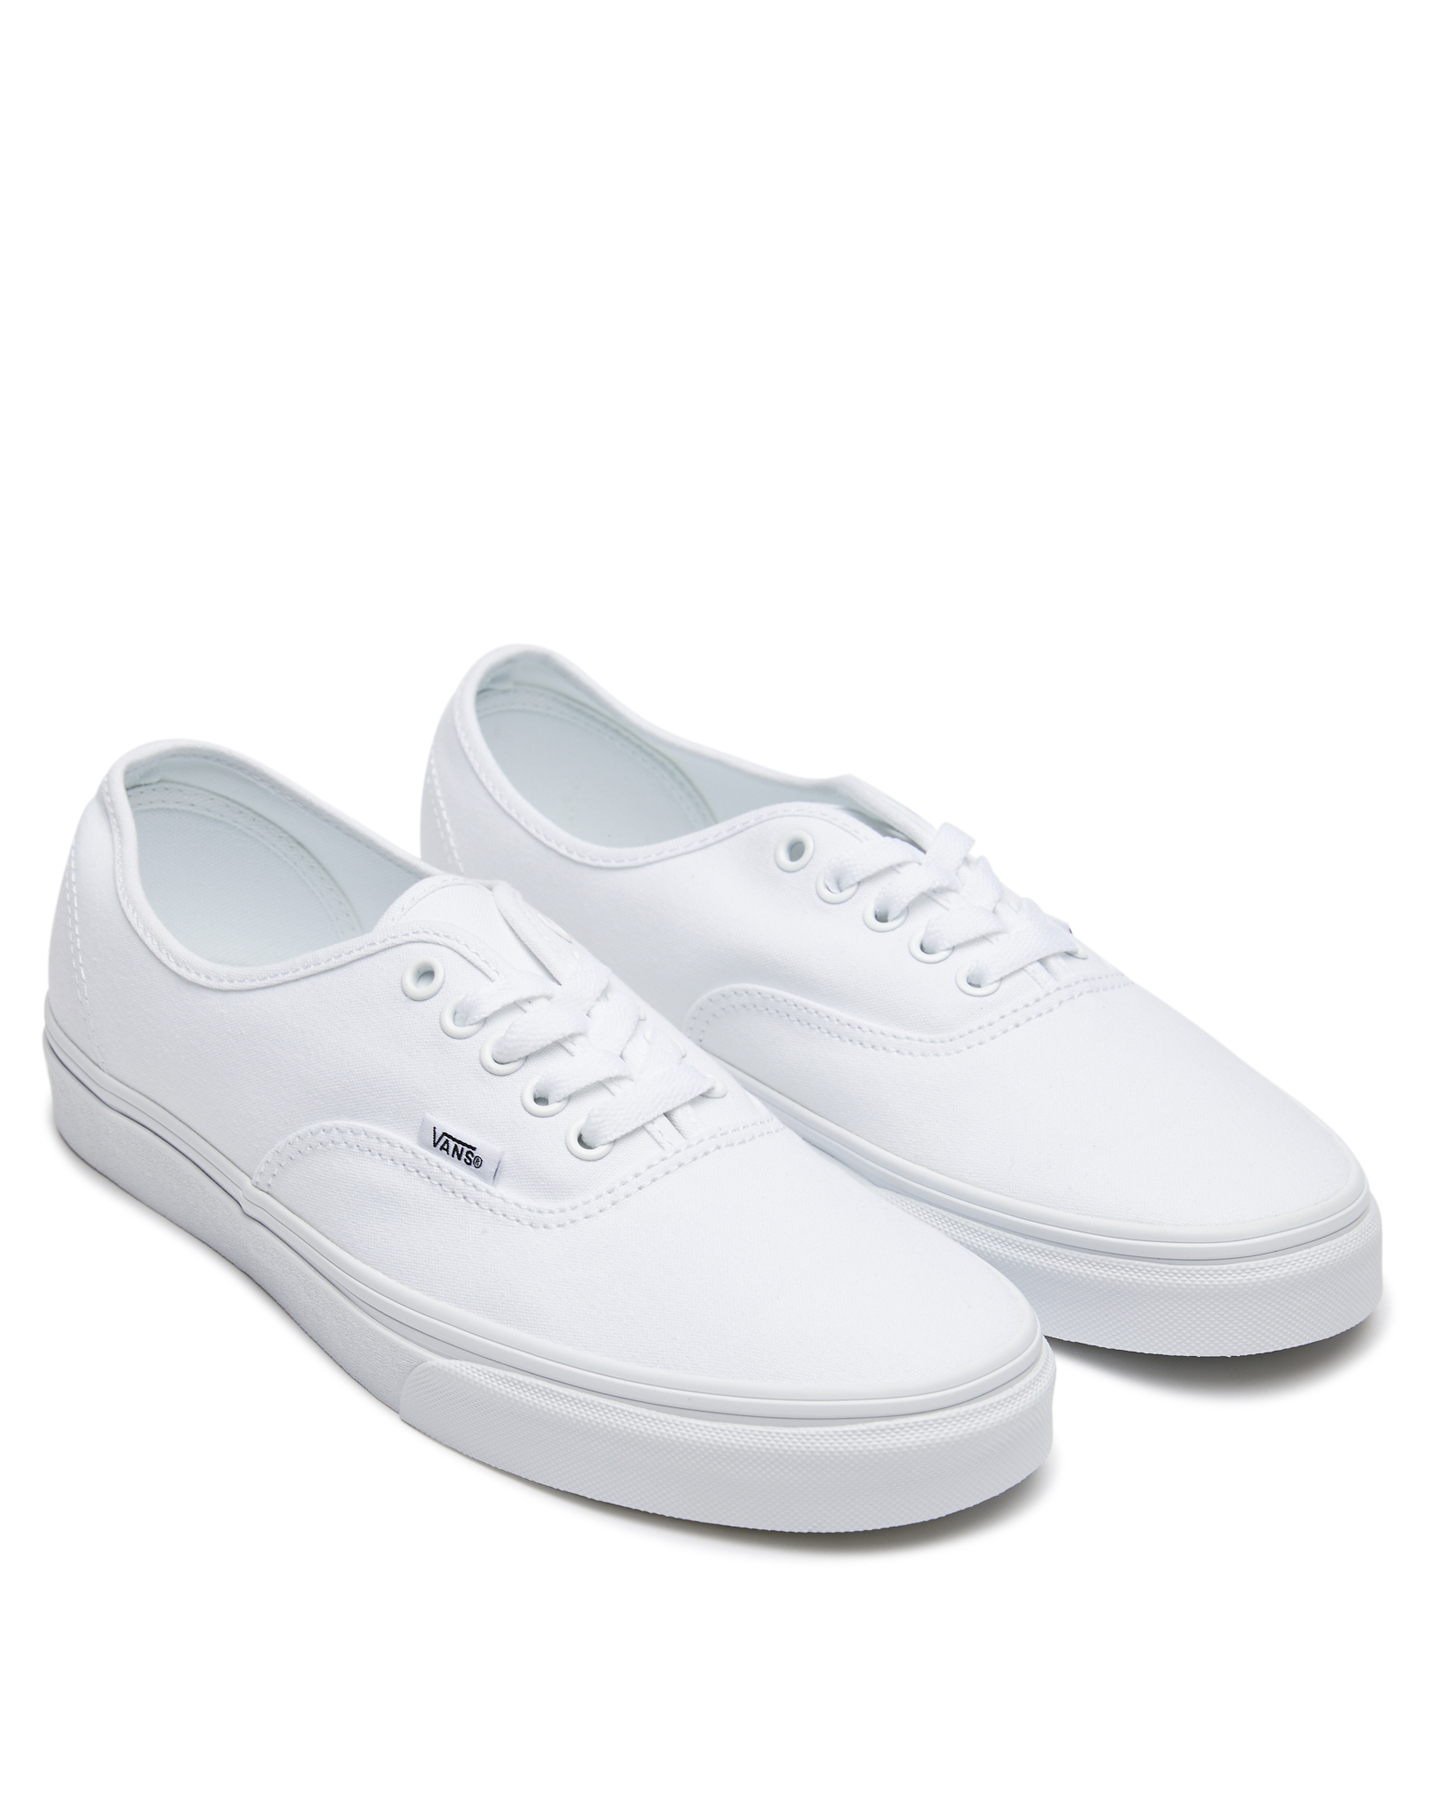 Vans Mens Authentic Shoe - True White | SurfStitch